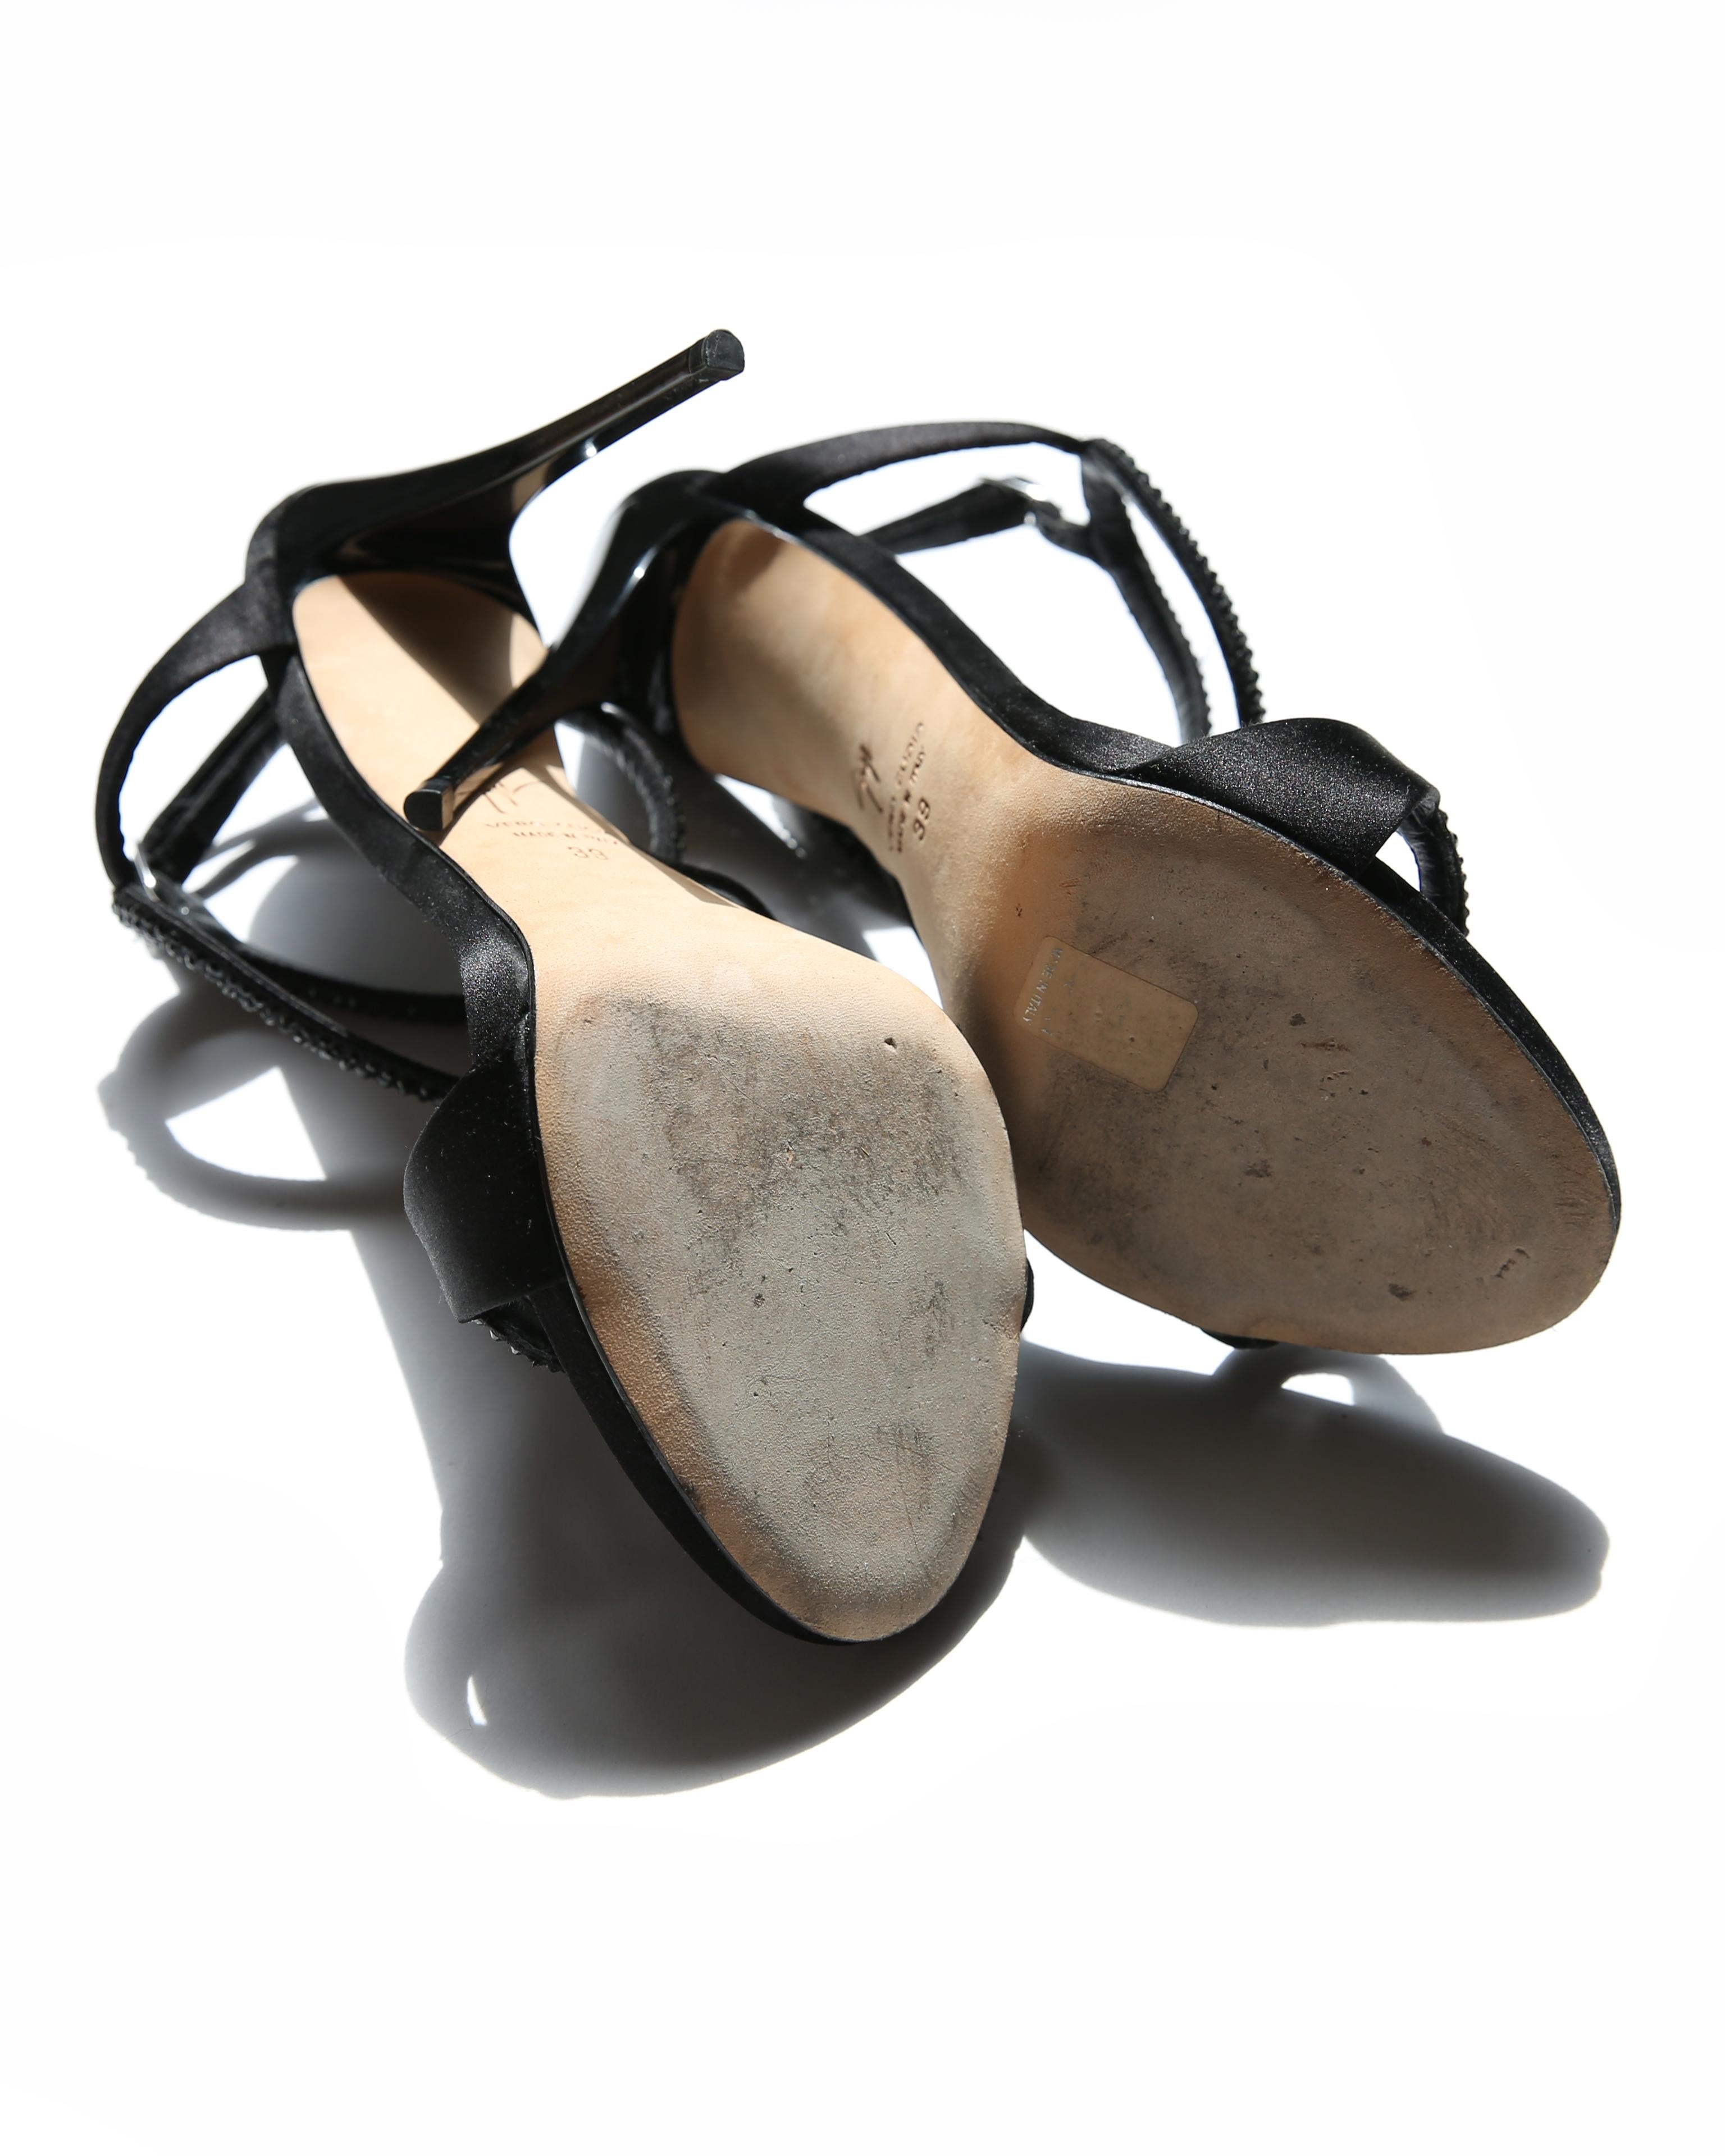 Women's Giuseppe Zanotti black satin stiletto high heel swarovski crystal sandals 39 For Sale